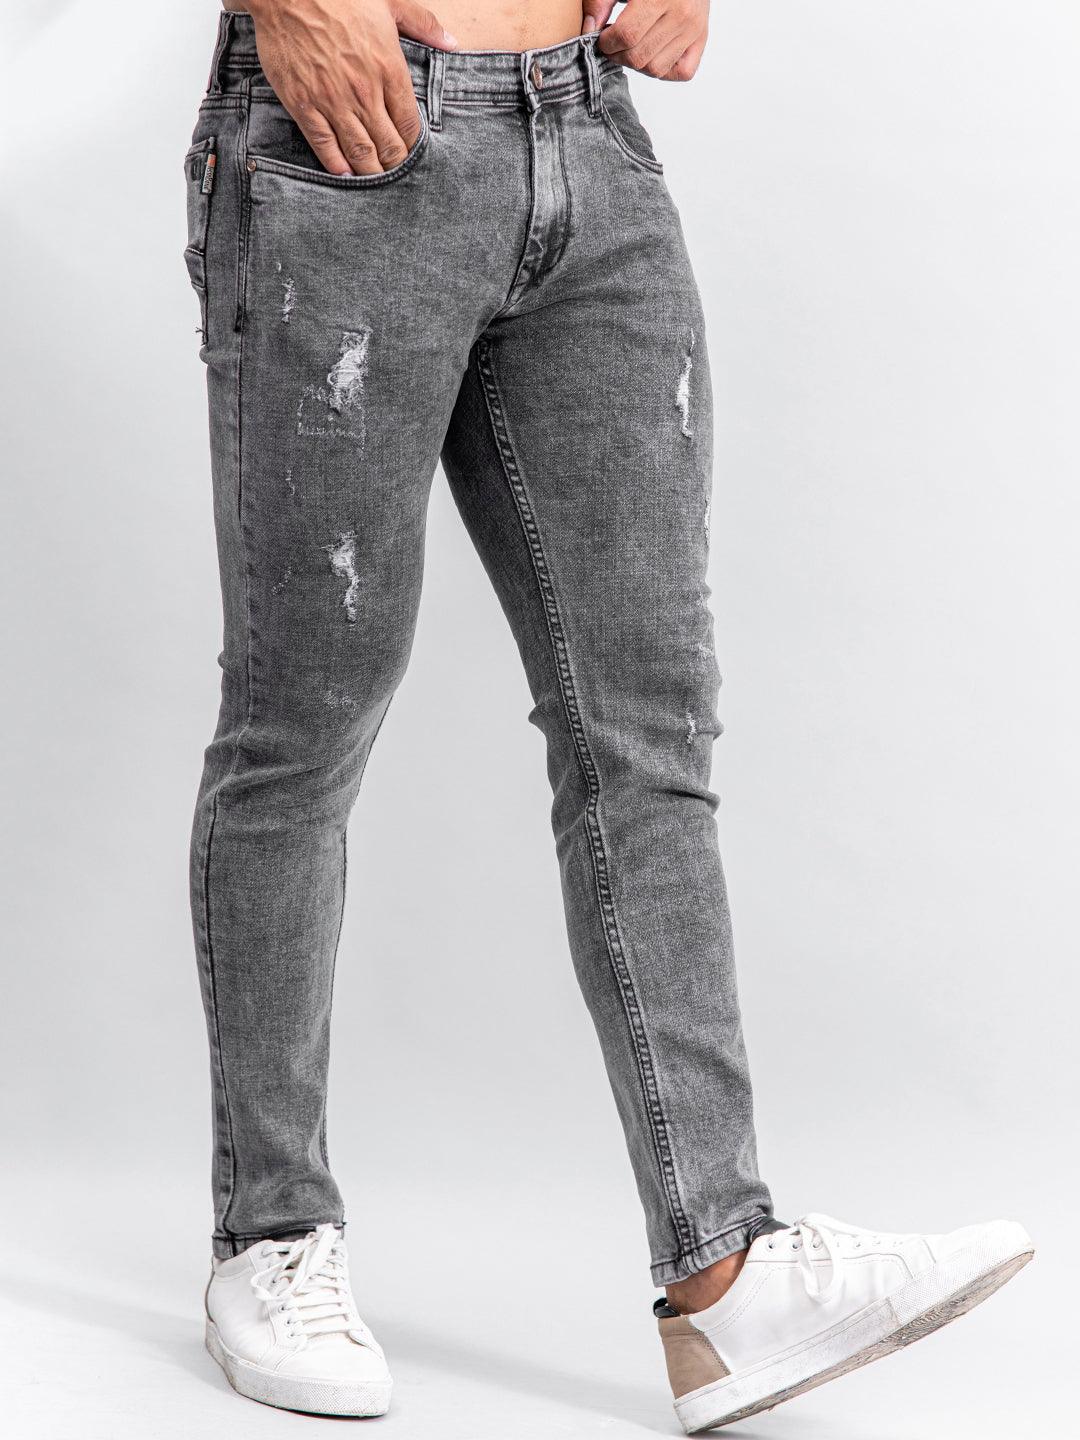 grey denim jeans 